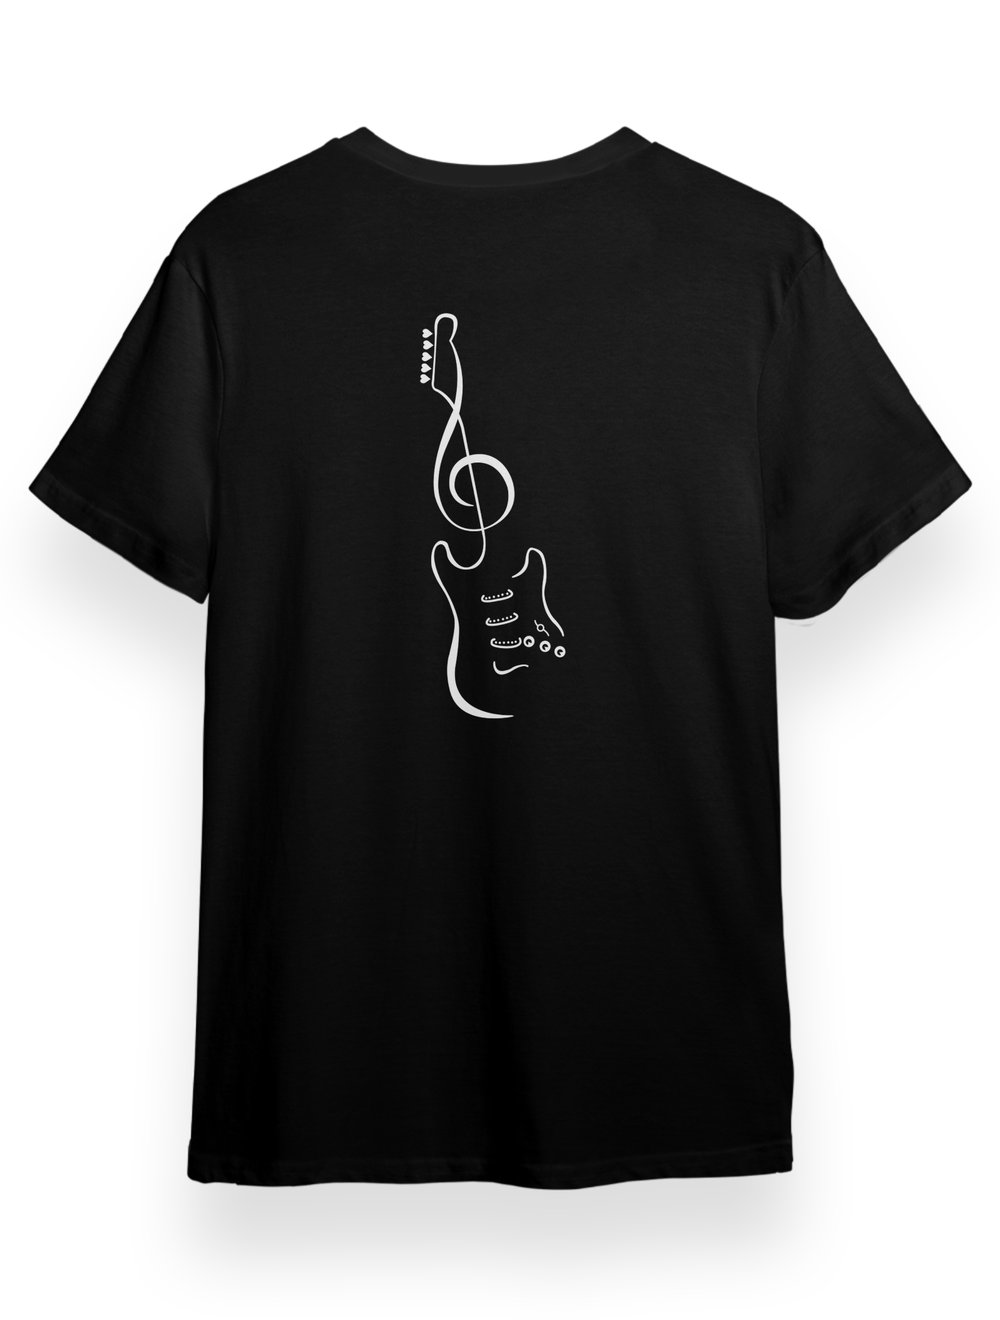 Elektronik Gitar ve Müzikal Nota Baskılı Siyah T-Shirt